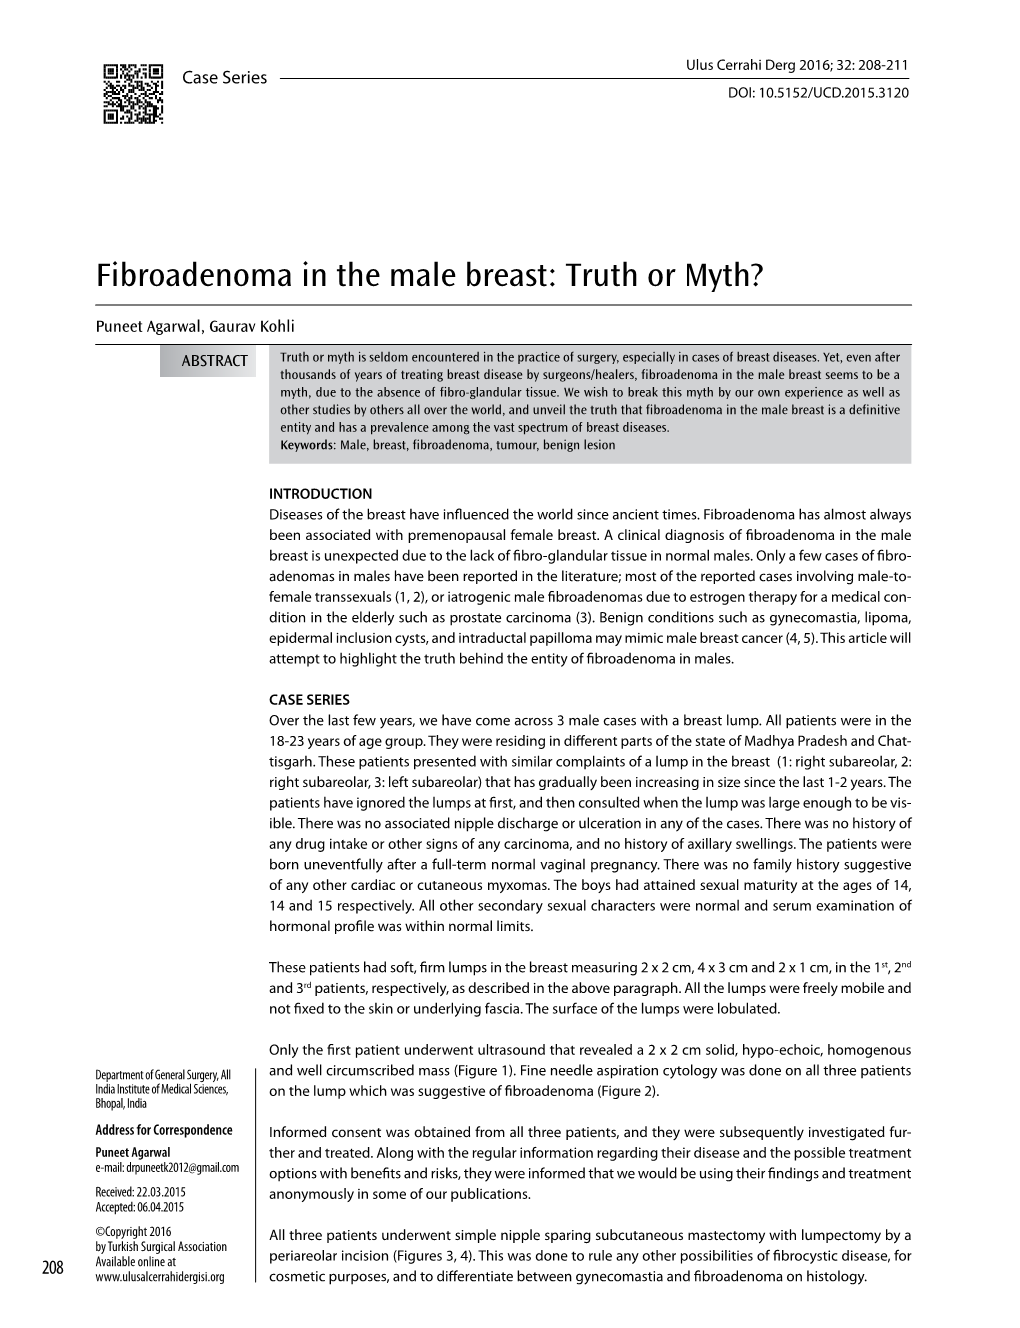 Fibroadenoma in the Male Breast: Truth Or Myth?